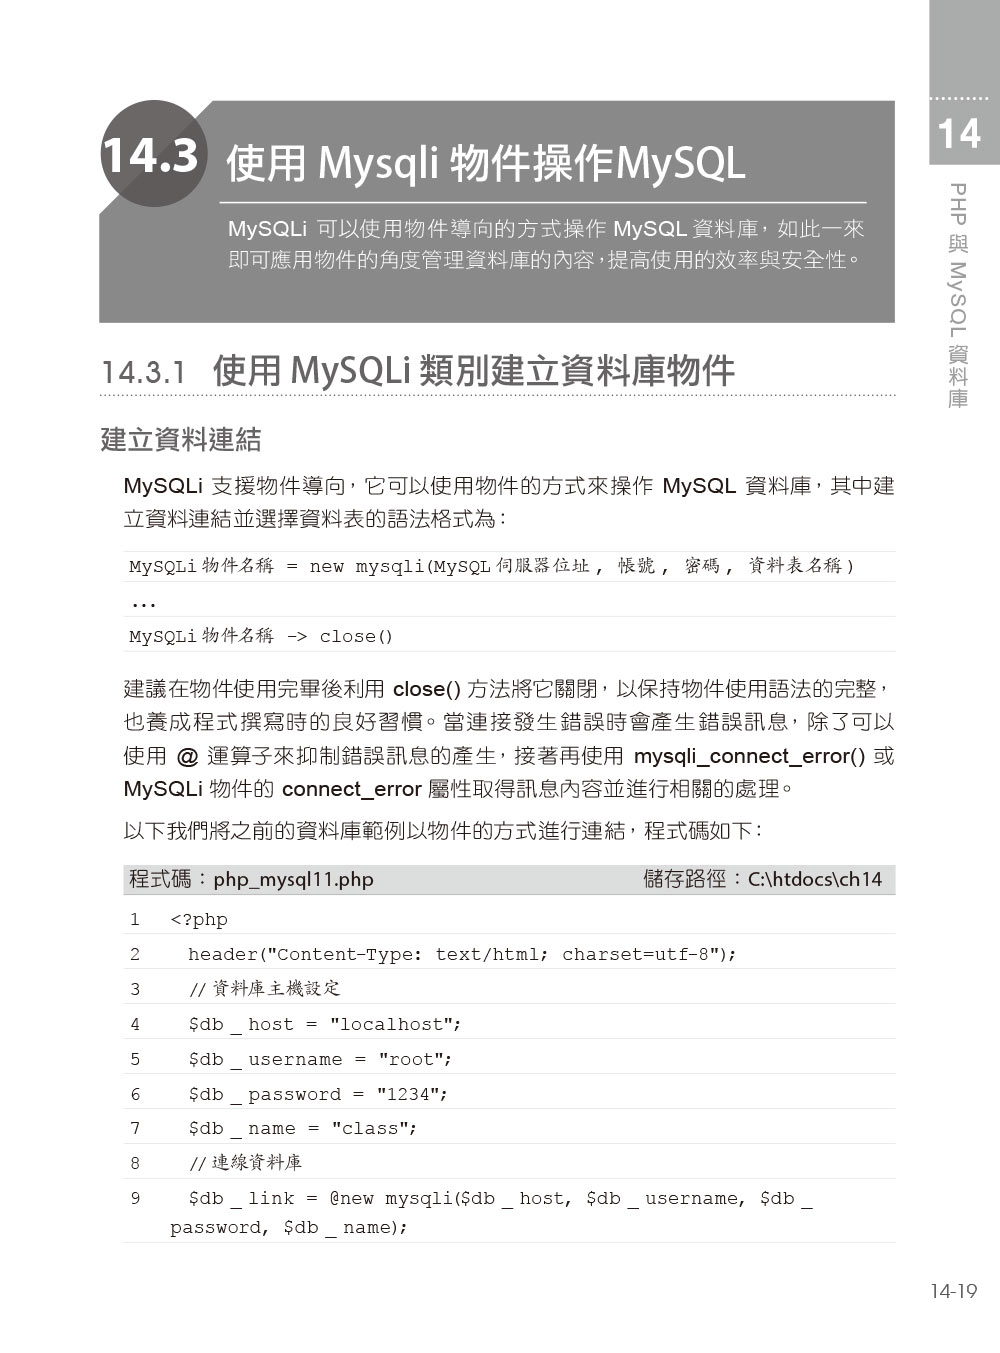 ►GO►最新優惠► 【書籍】挑戰PHP7/MySQL程式設計與超強專題特訓班(第四版)(適用PHP5~7，MariaDB)